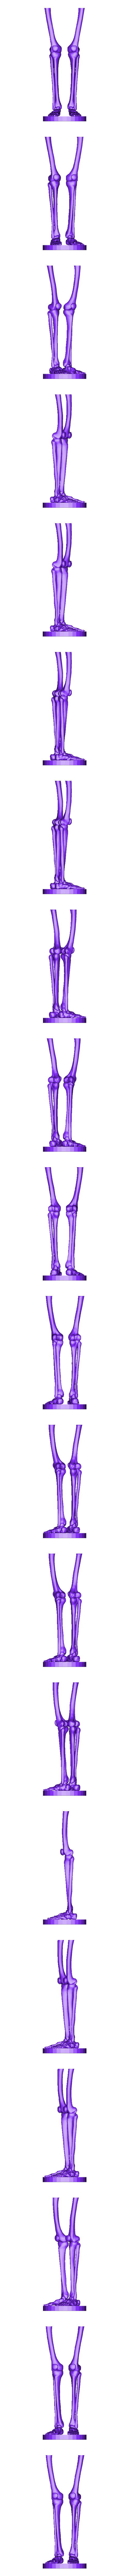 limbs_skel.stl STL-Datei Human Skeleton kostenlos herunterladen • 3D-druckbares Modell, Cornbald